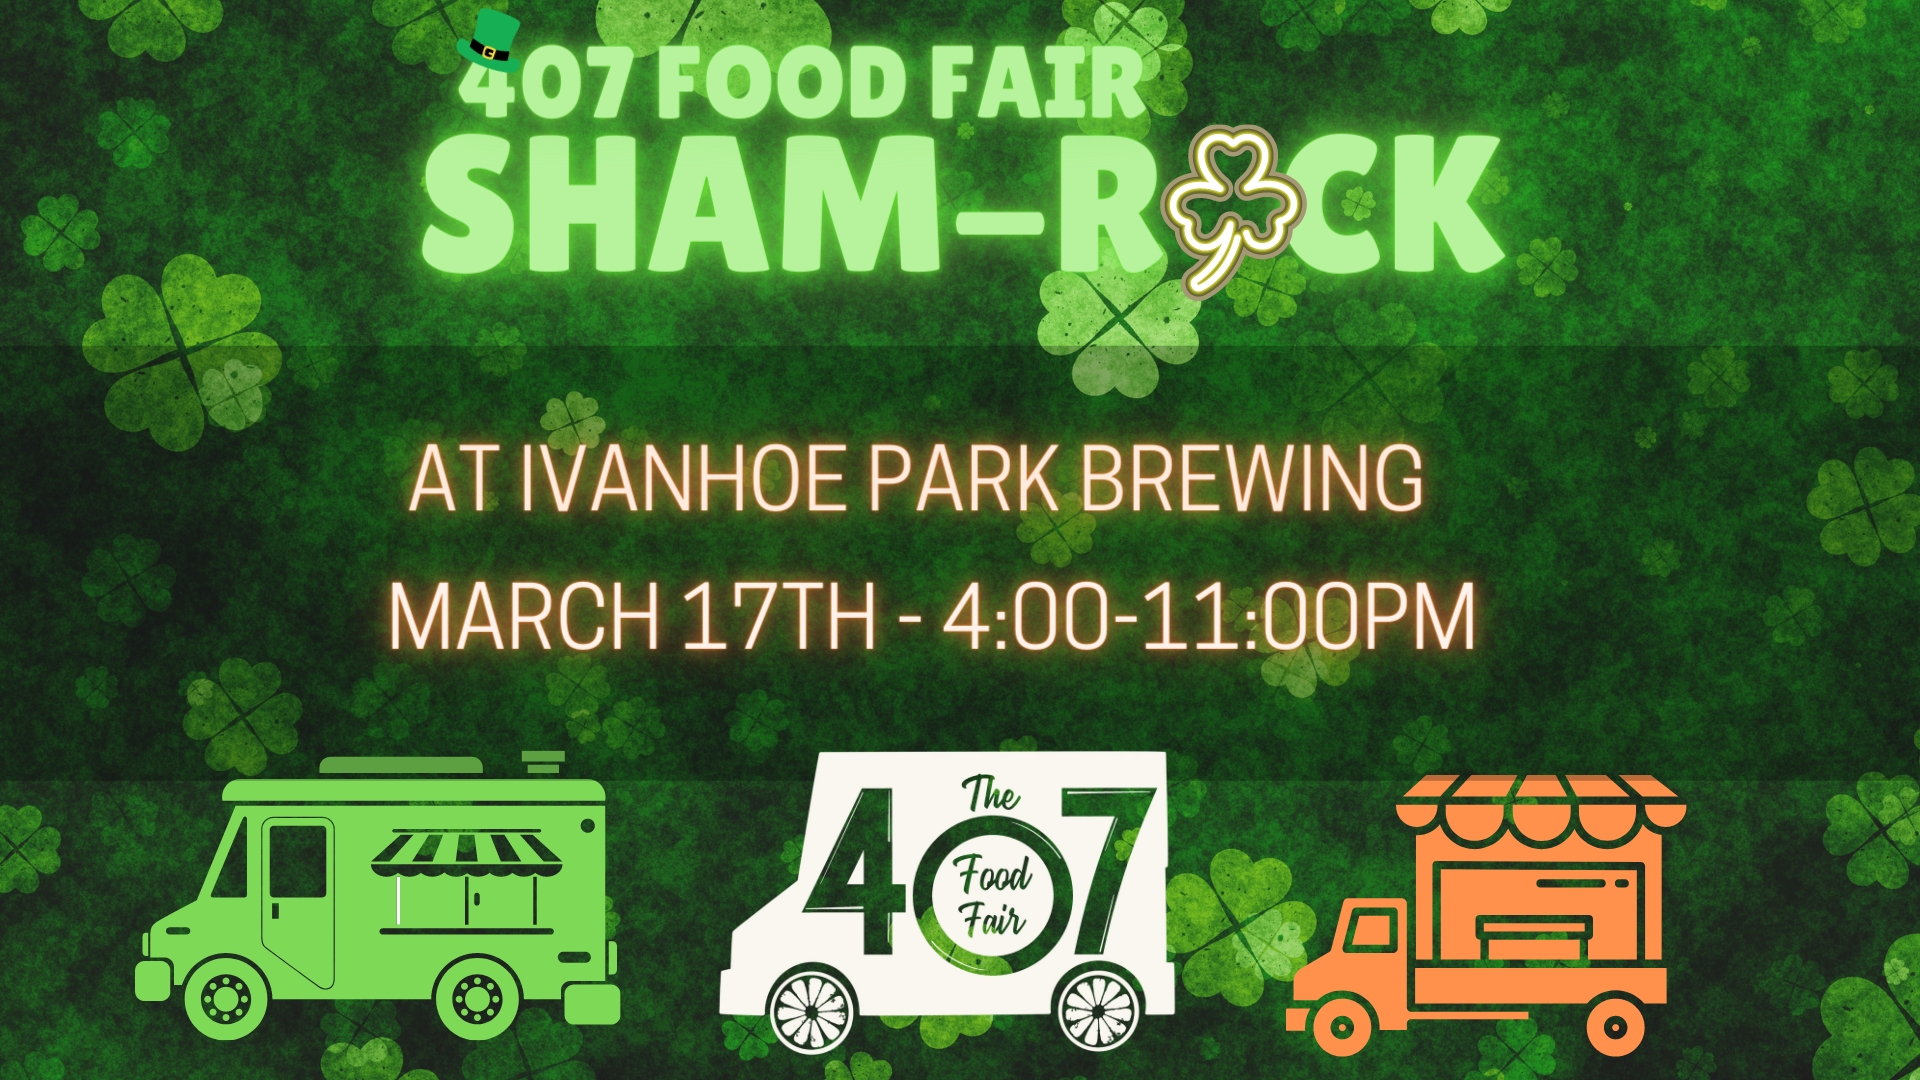 407 Food Fair: Sham-Rock cover image